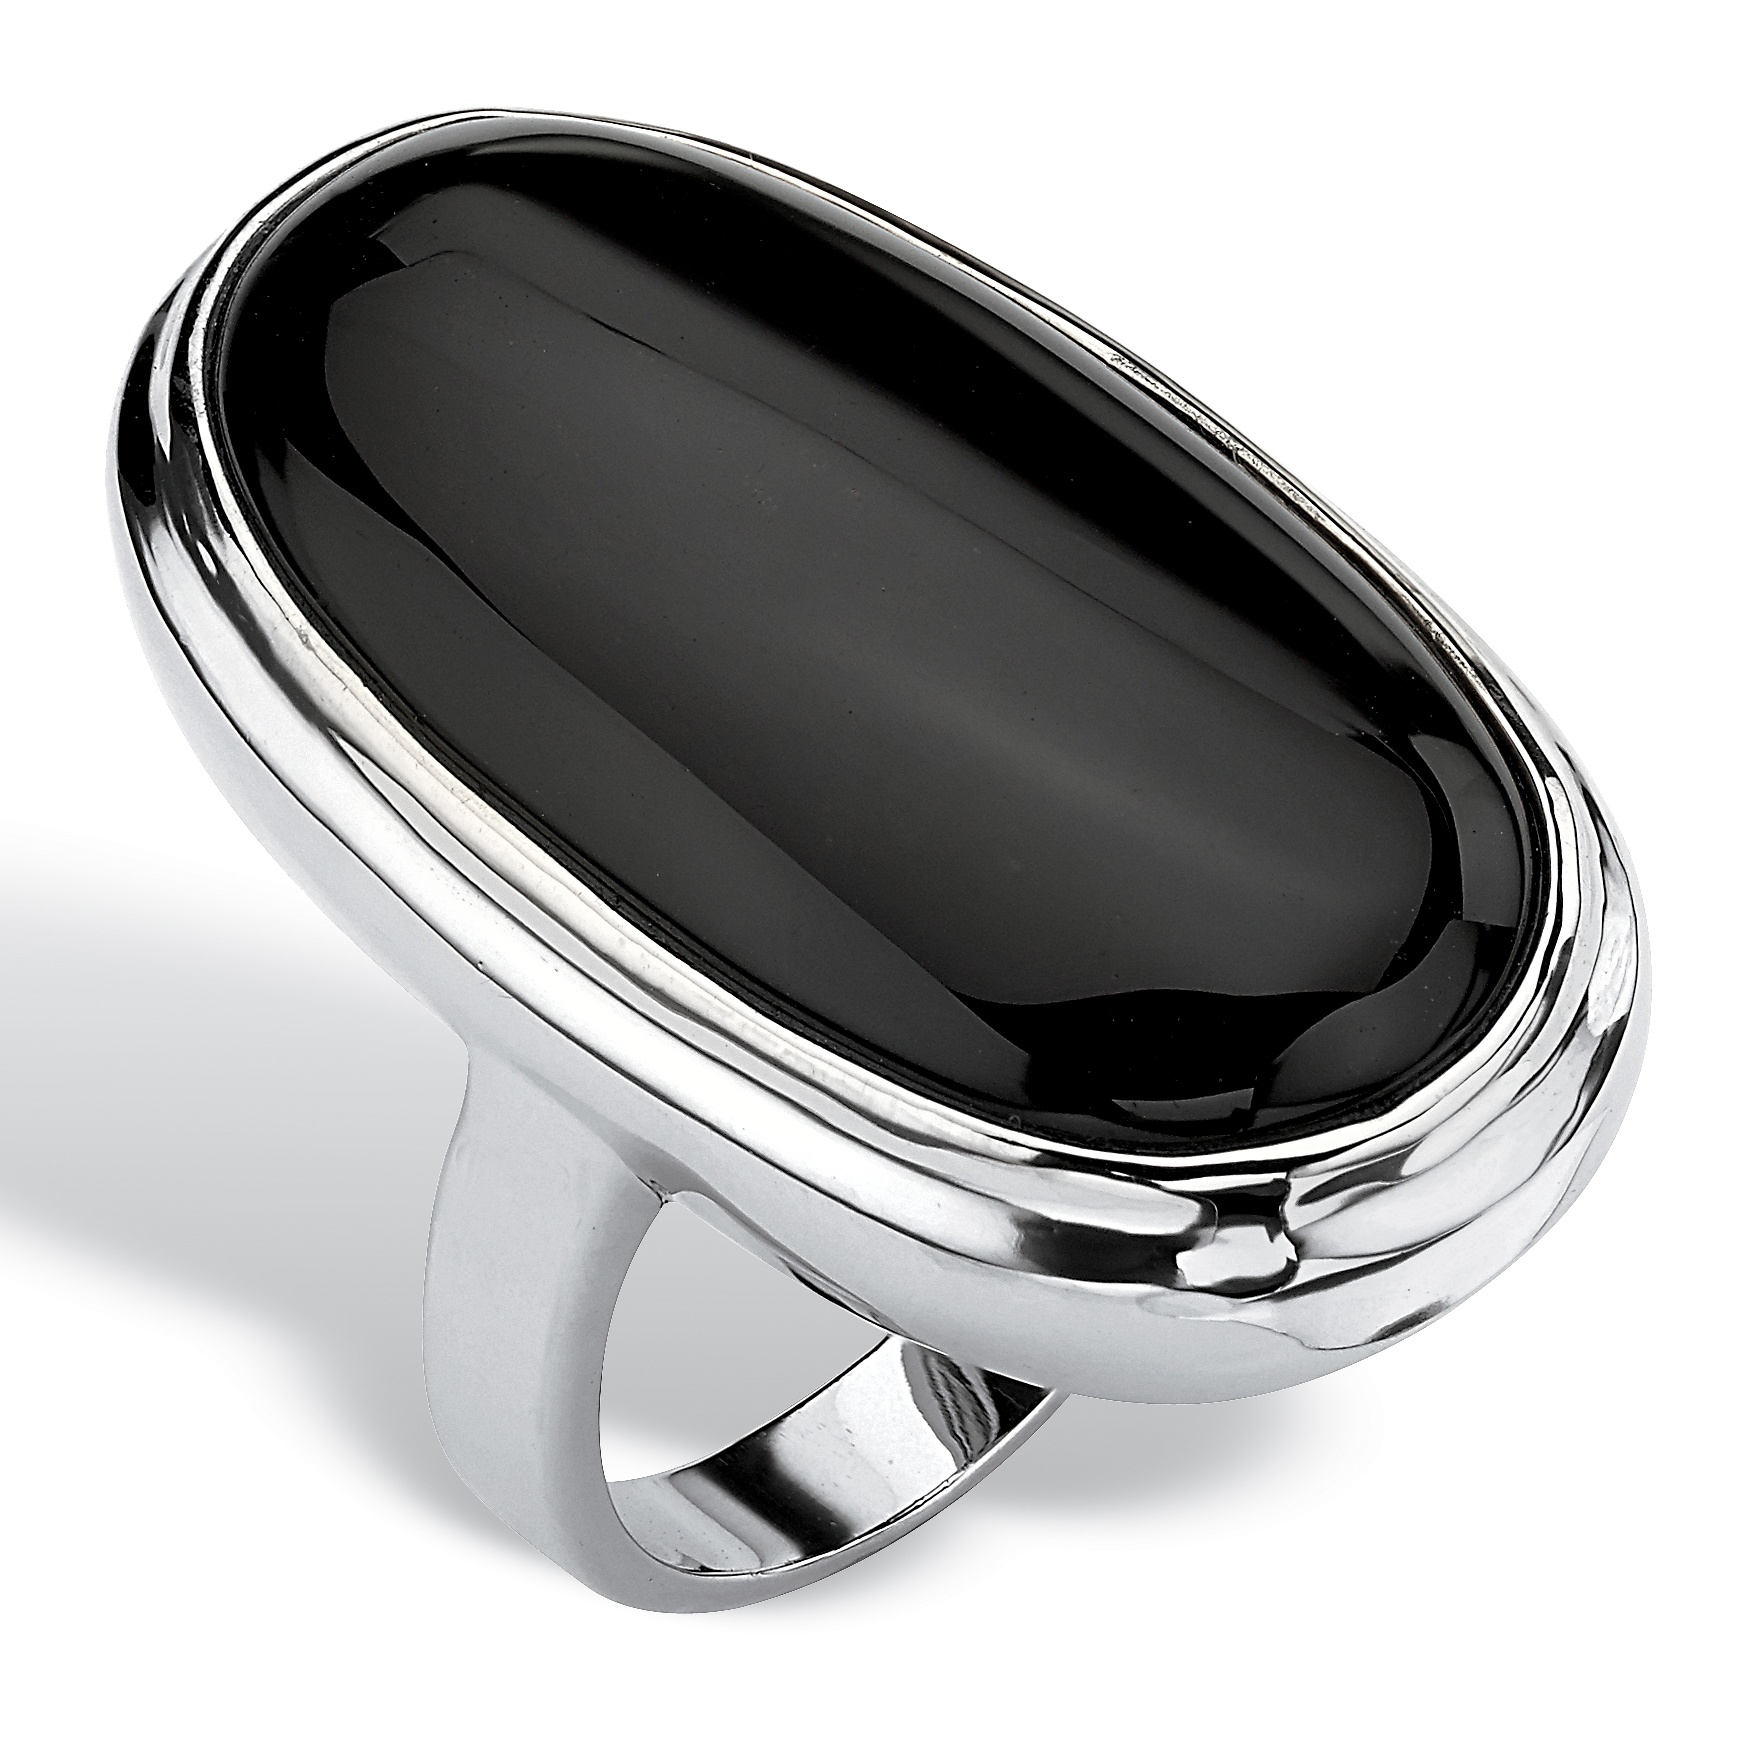 Oval-Cut Genuine Black Onyx Cabochon Ring in Silvertone at PalmBeach